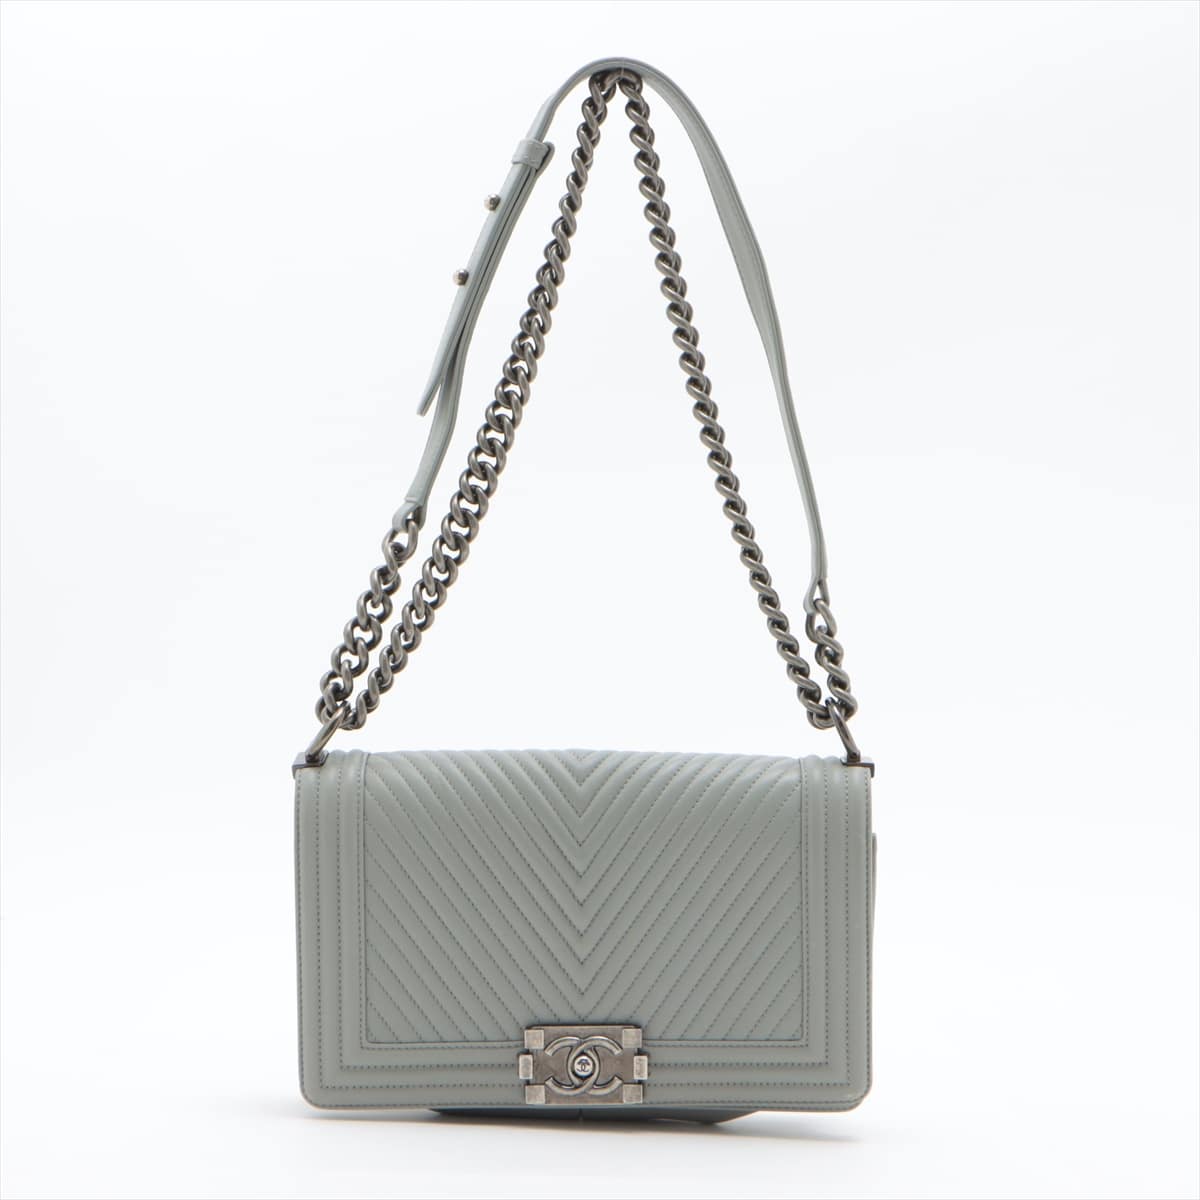 Chanel Boy Chanel Lambskin Chain shoulder bag Grey Silver Metal fittings 19XXXXXX